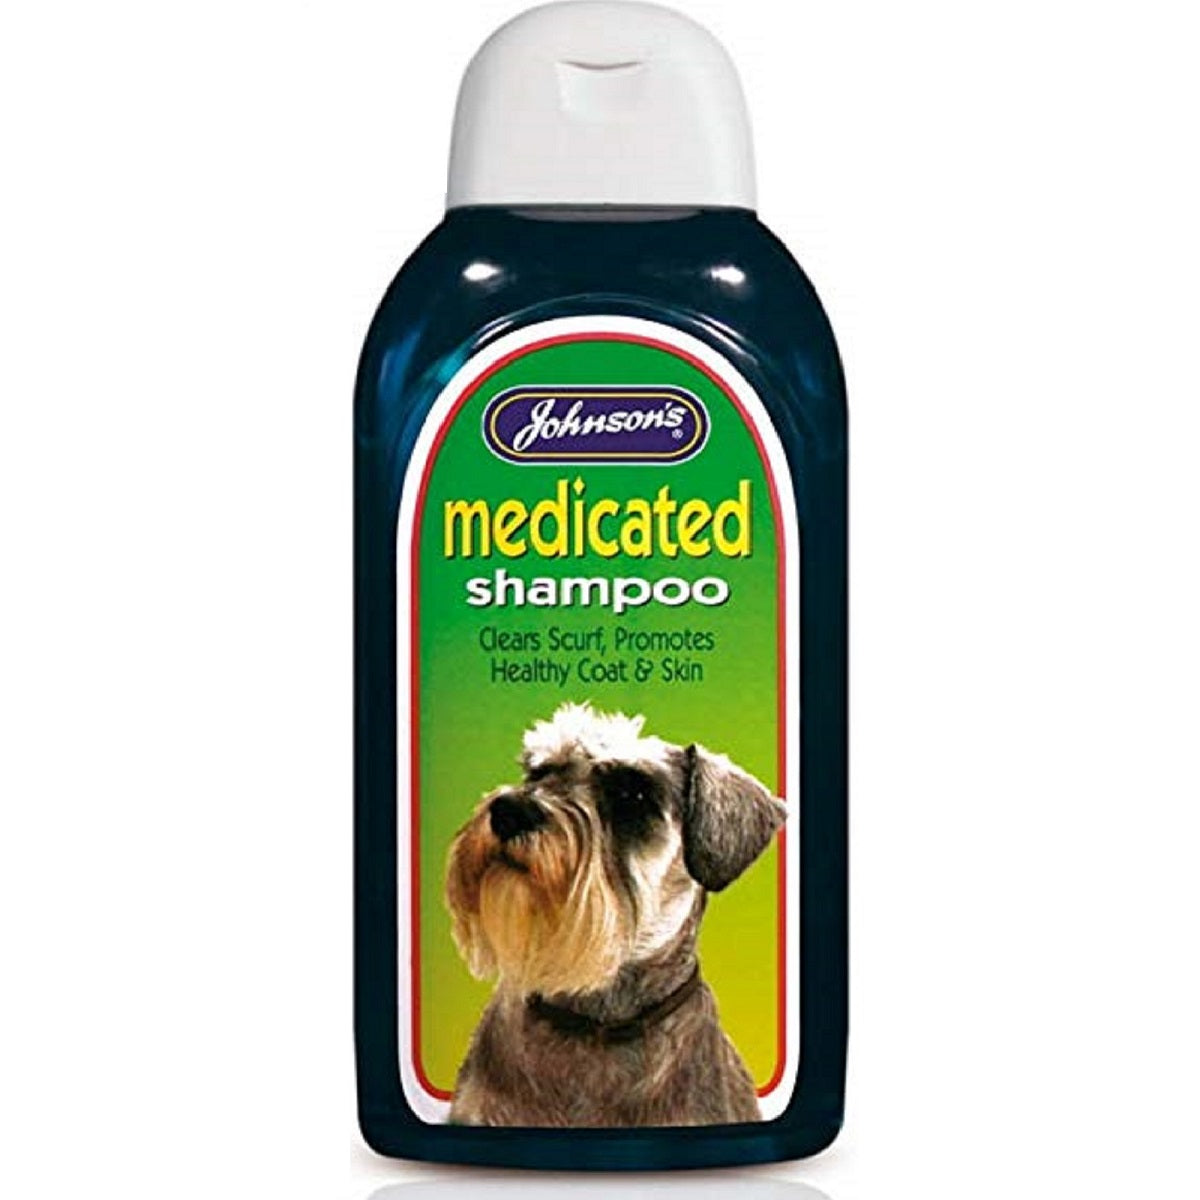 Johnsons - Medicated Shampoo